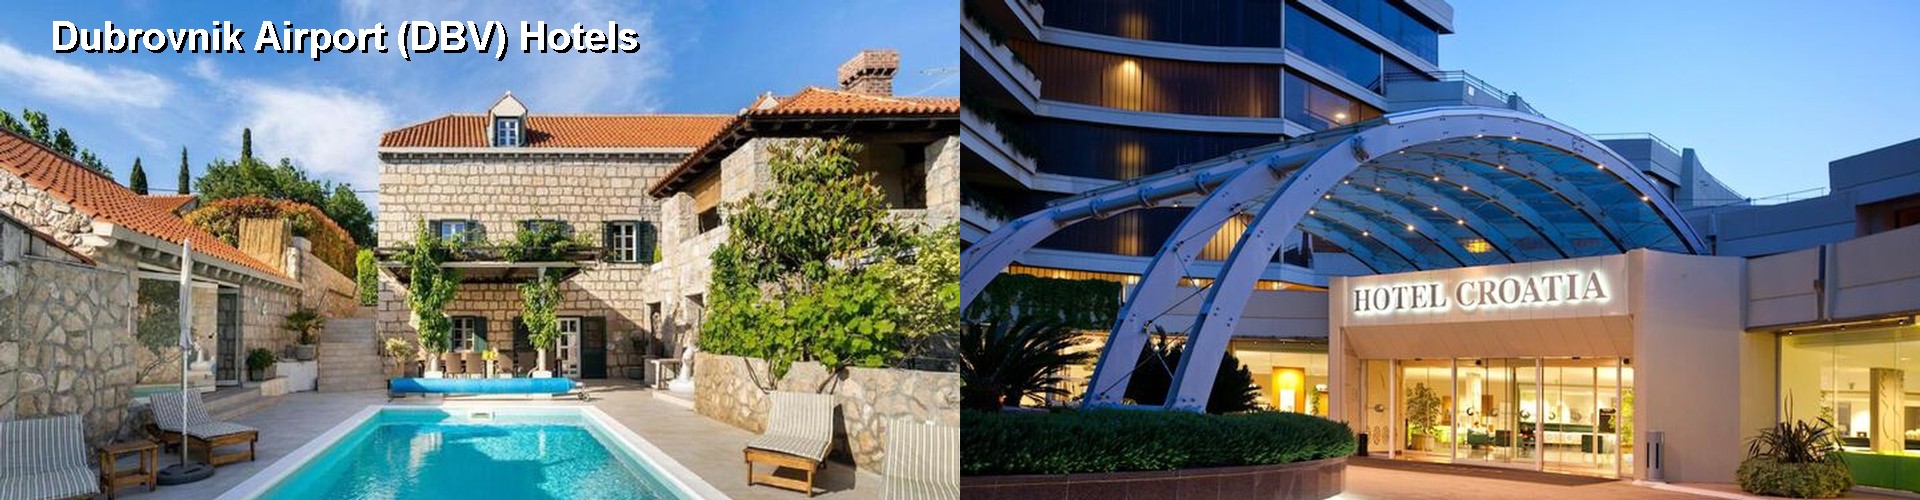 5 Best Hotels near Dubrovnik Airport (DBV)